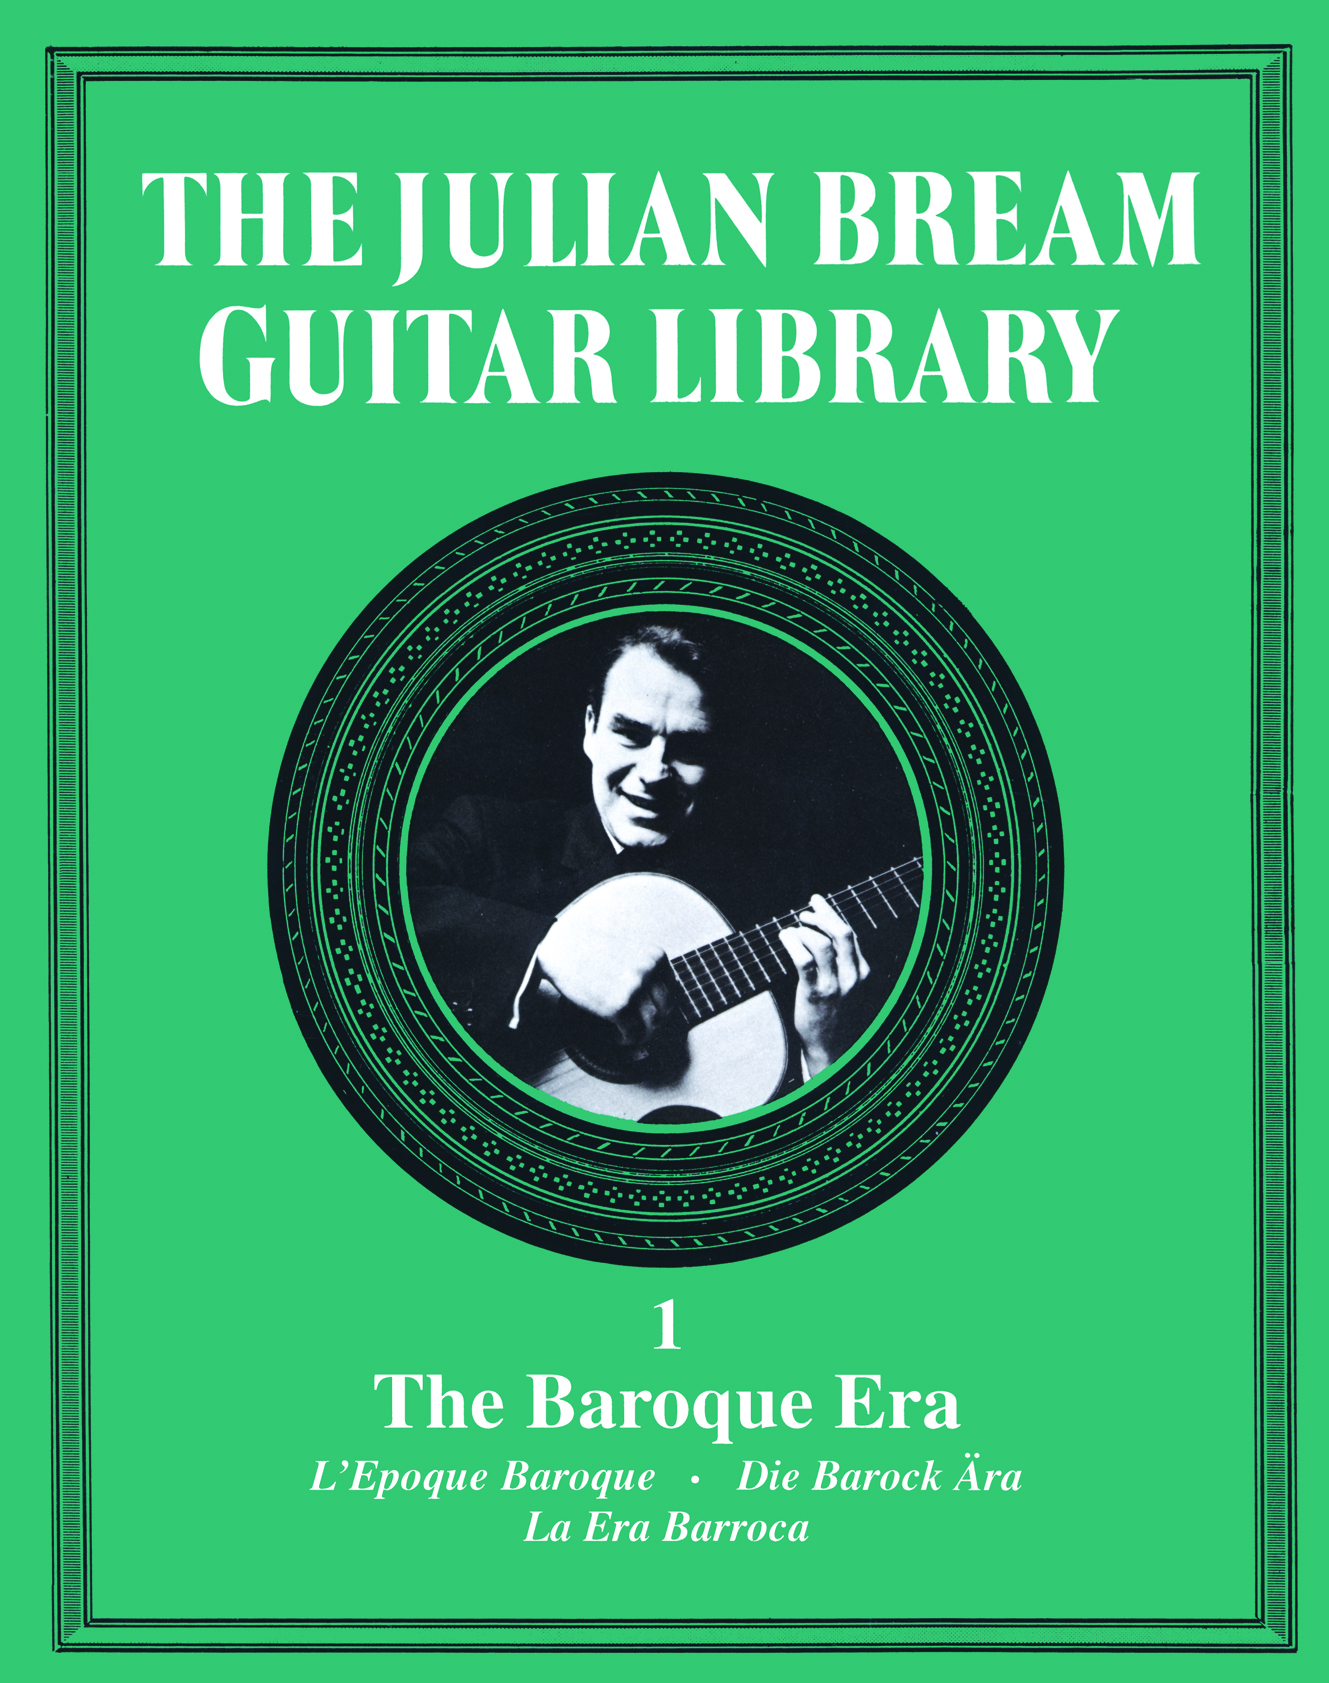 The Julian Bream Guitar Library Volume 1: The Baroque Era